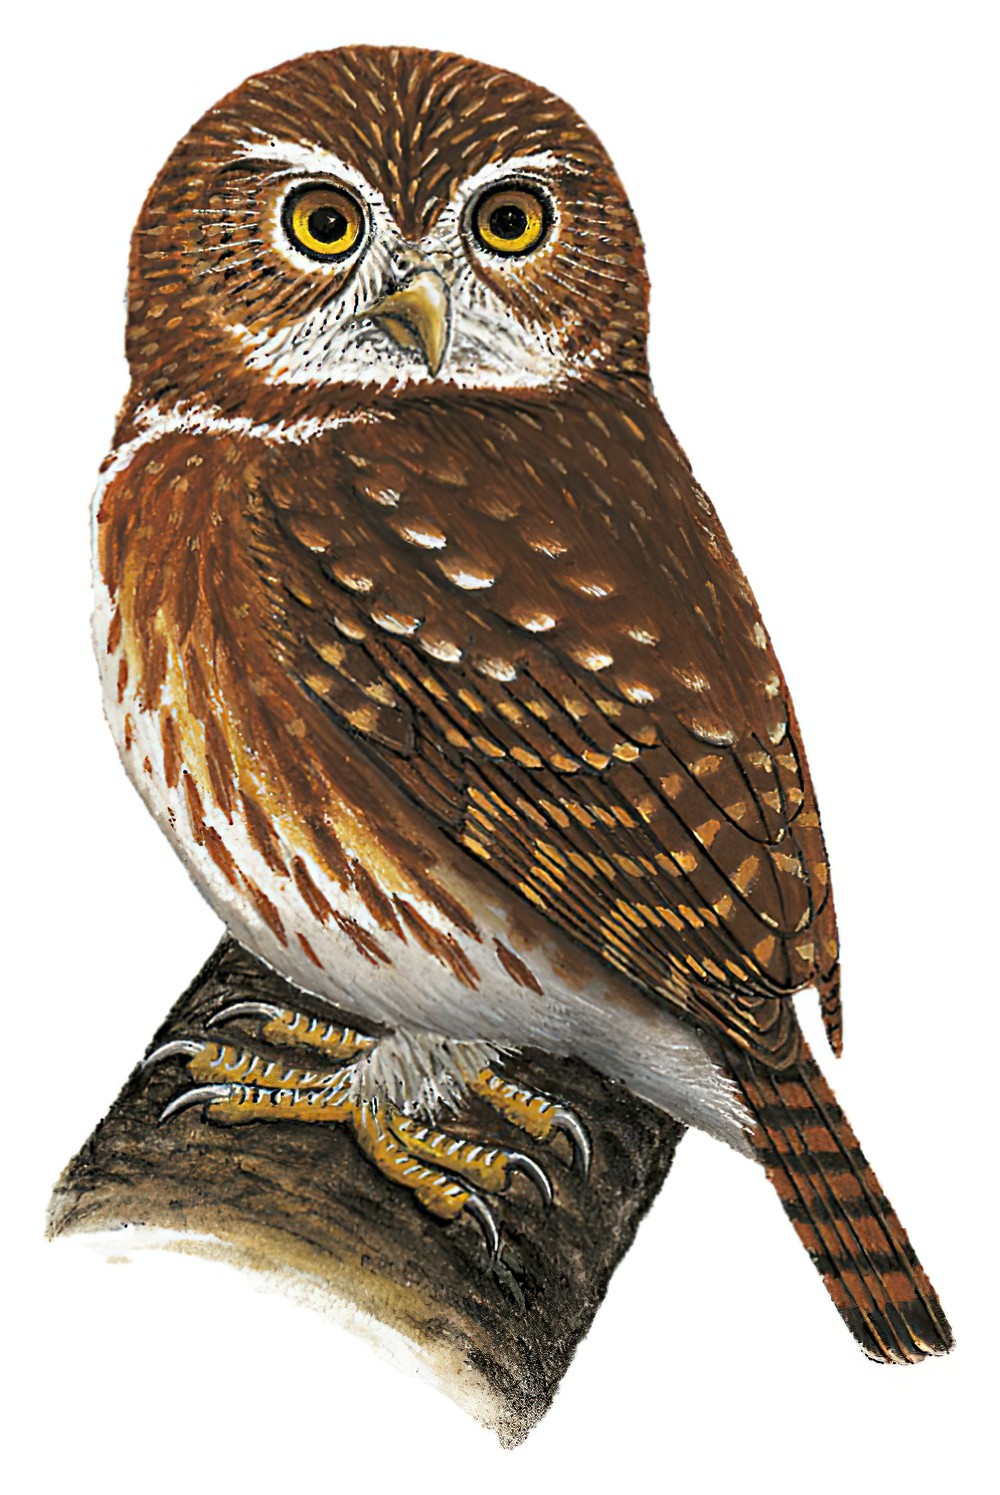 Peruvian Pygmy-Owl / Glaucidium peruanum